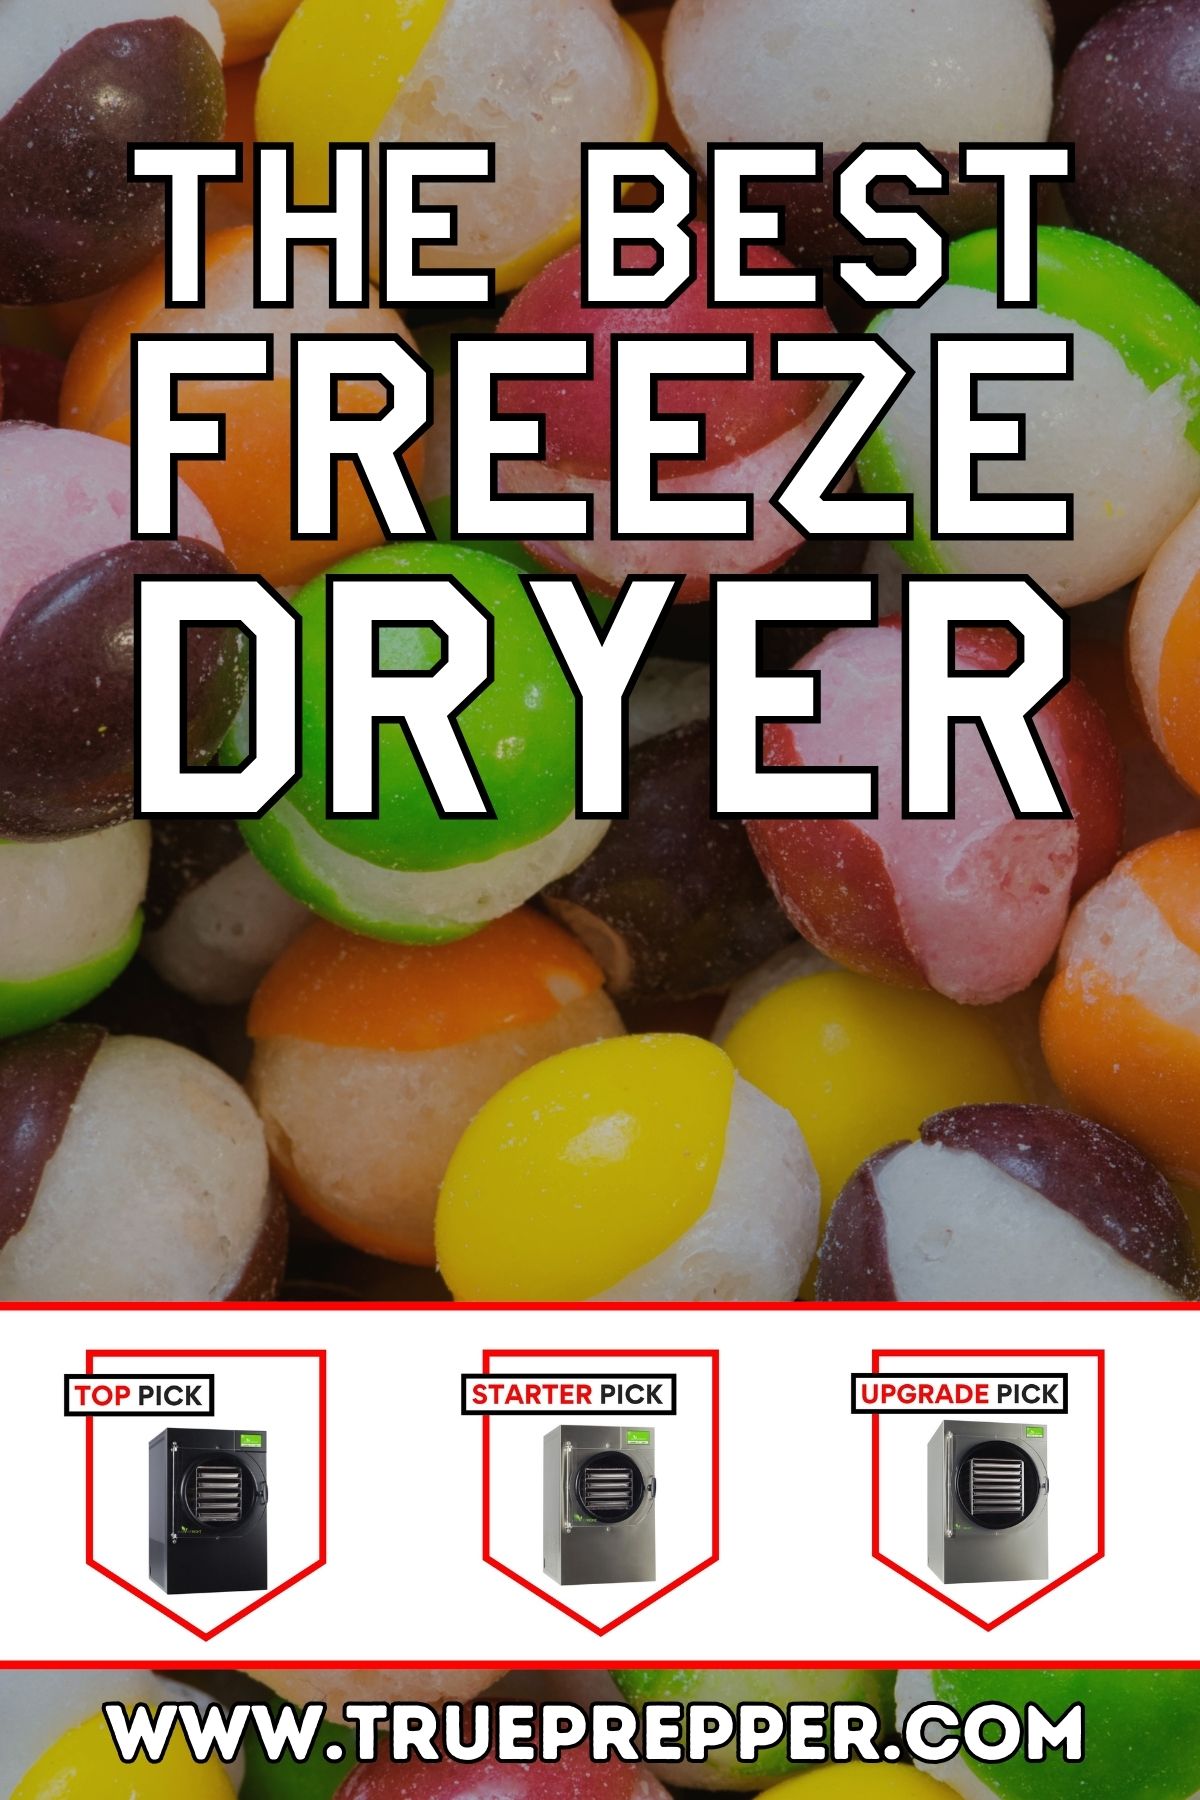 The Best Freeze Dryer